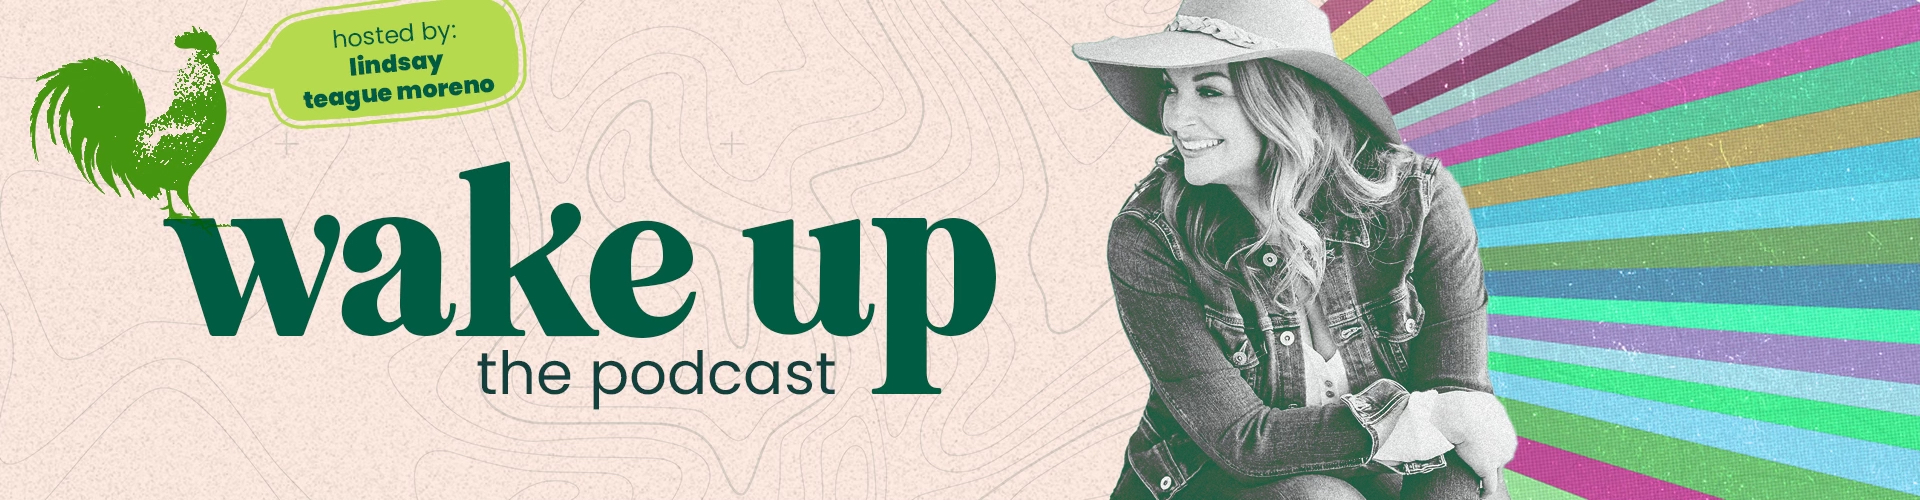 Wake Up the Podcast | Lindsay Teague Moreno